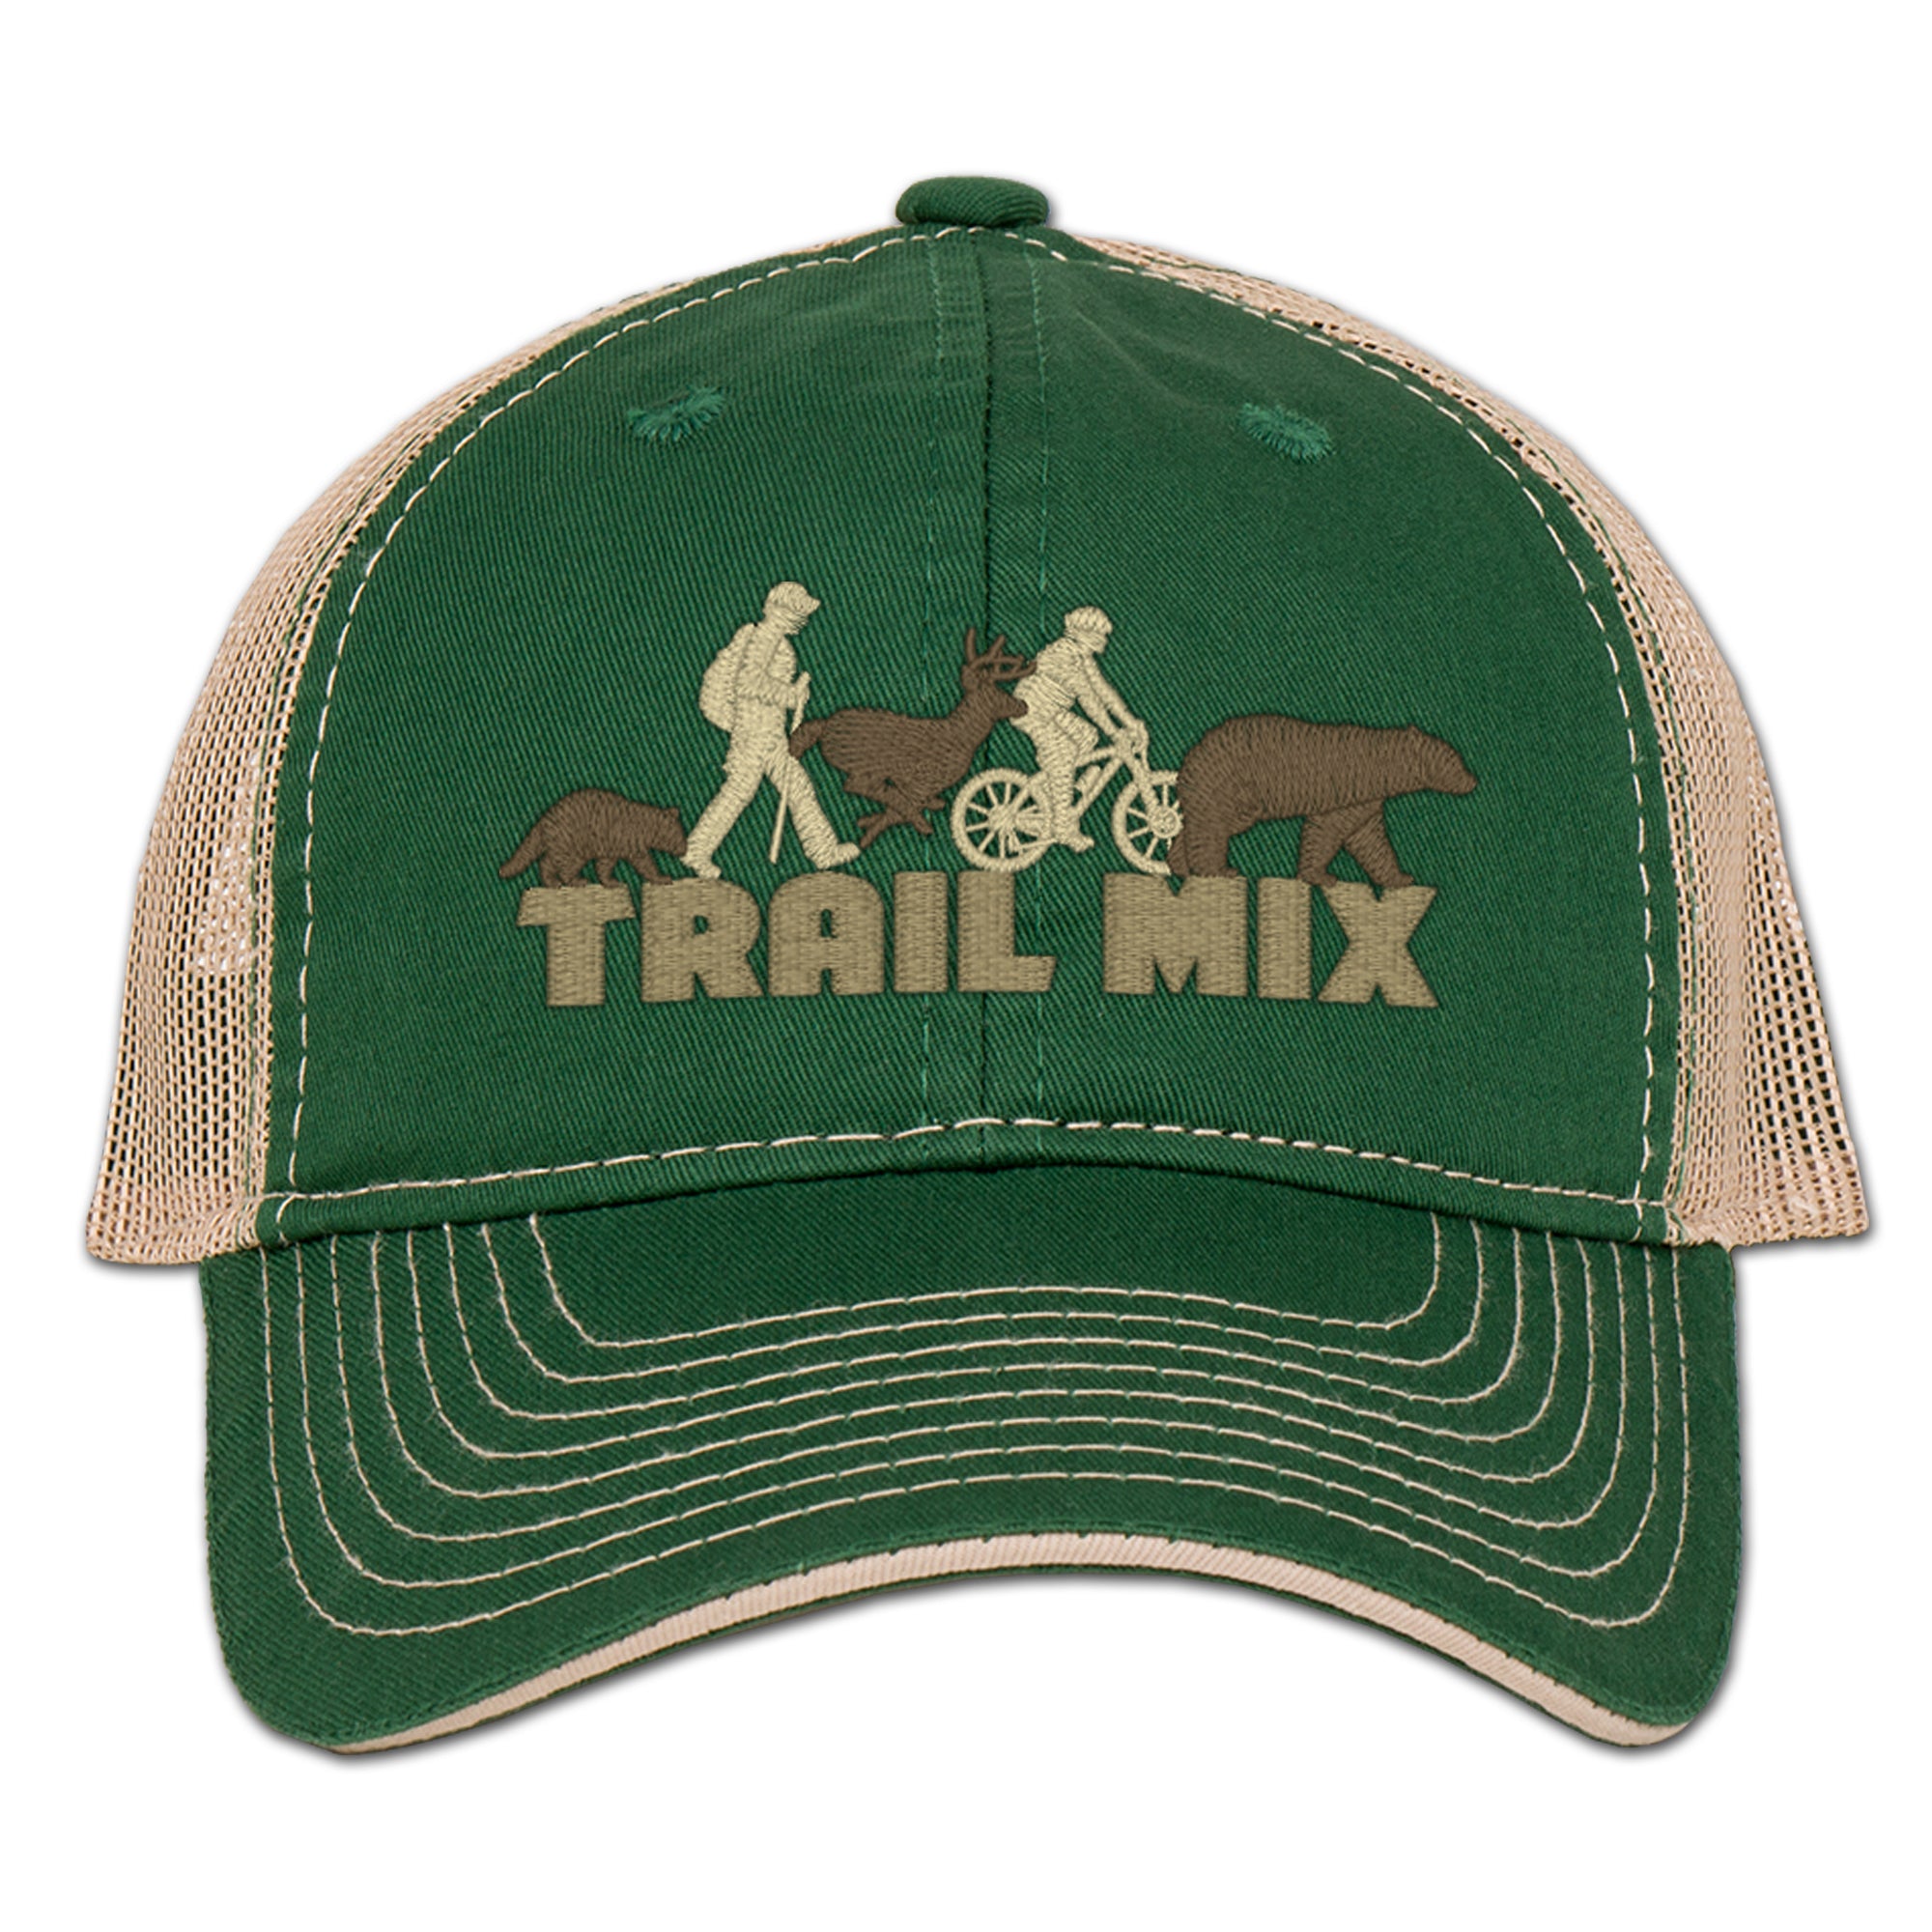 Earth Sun Moon Trail Mix Trucker Hat - Dark Green/Khaki - Adjustable